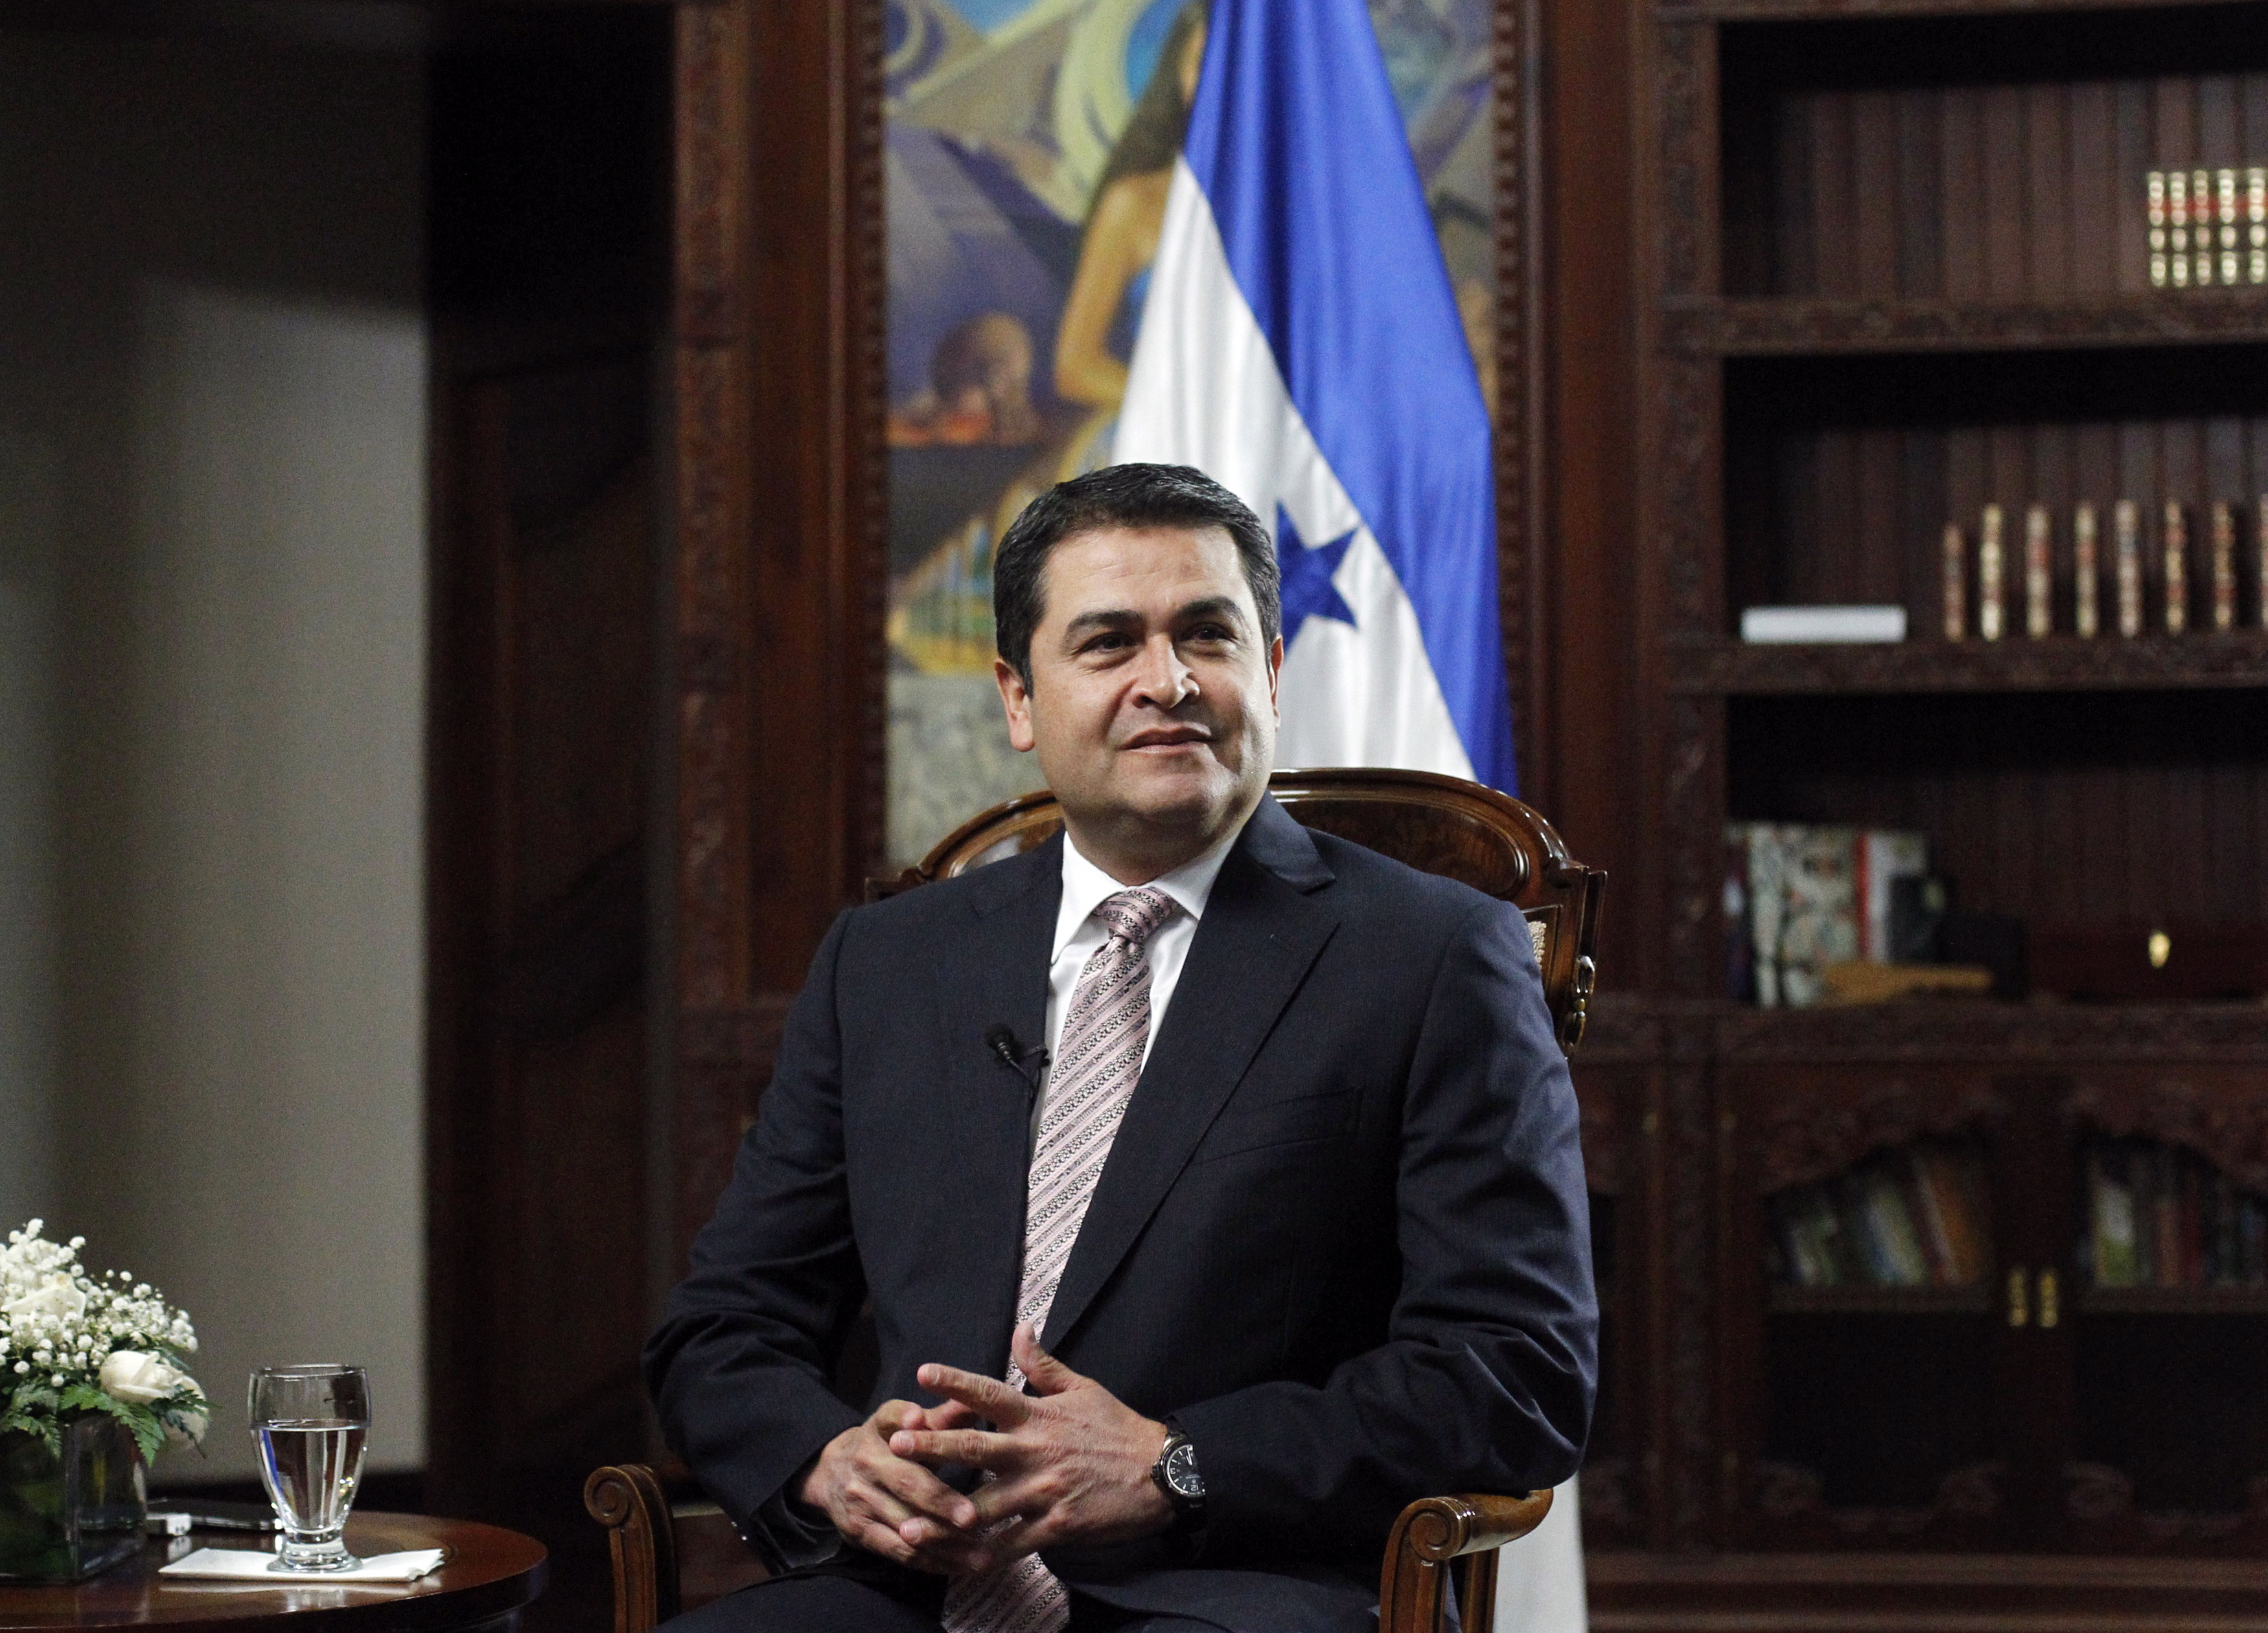 A conversation with President Juan Orlando Hernández of Honduras